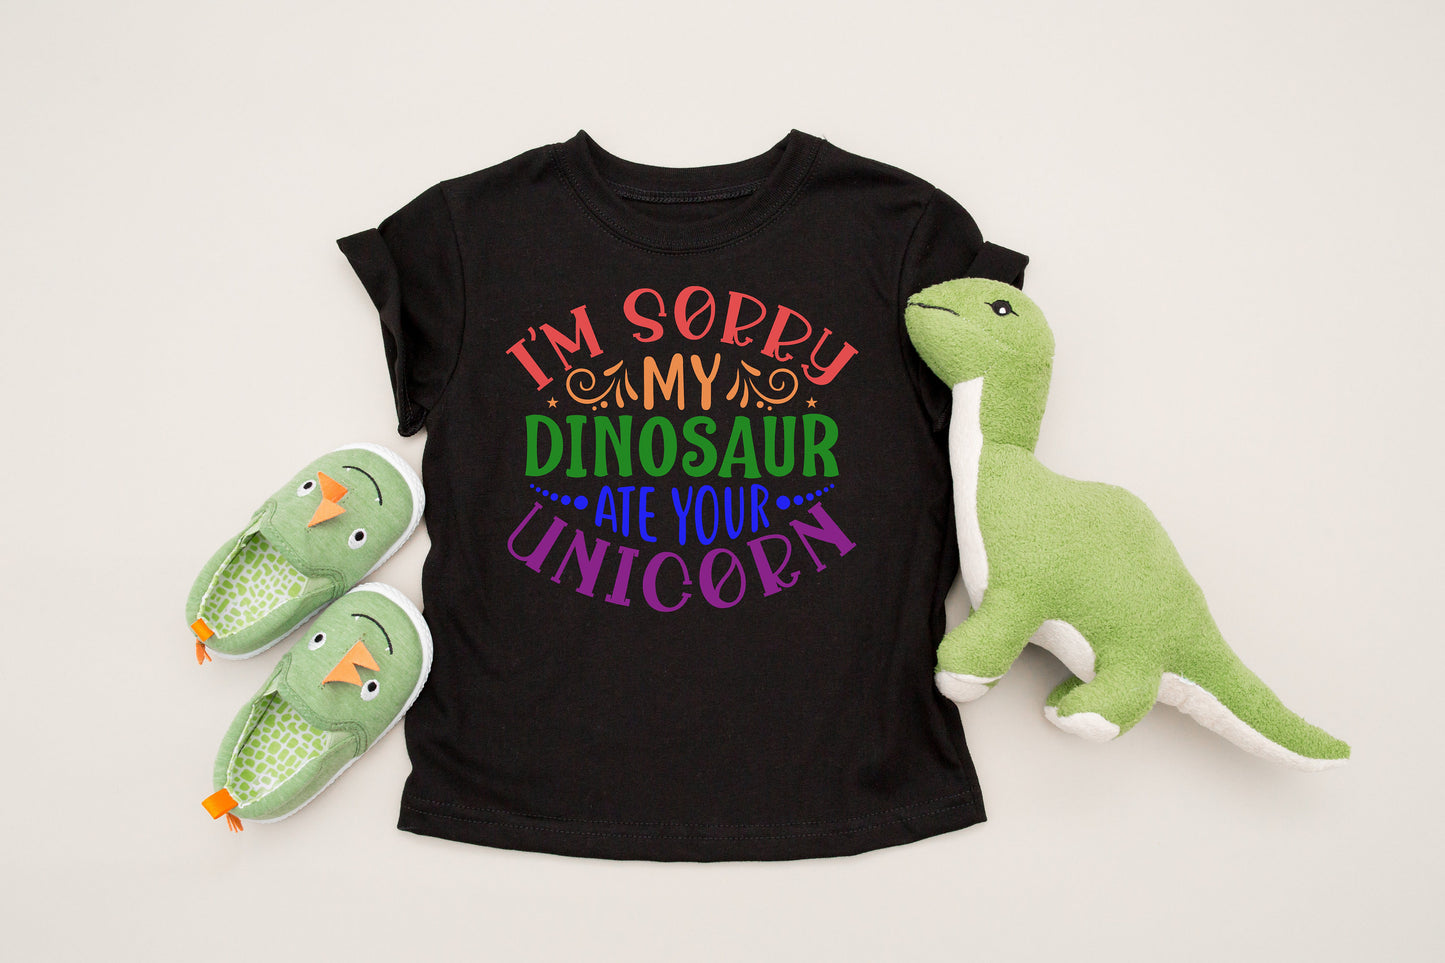 I'm Sorry My Dinosaur Ate Your Unicorn Unisex Infant Toddler or Kids Shirt - Smart Girl Shirt -  Dinosaur Birthday Party